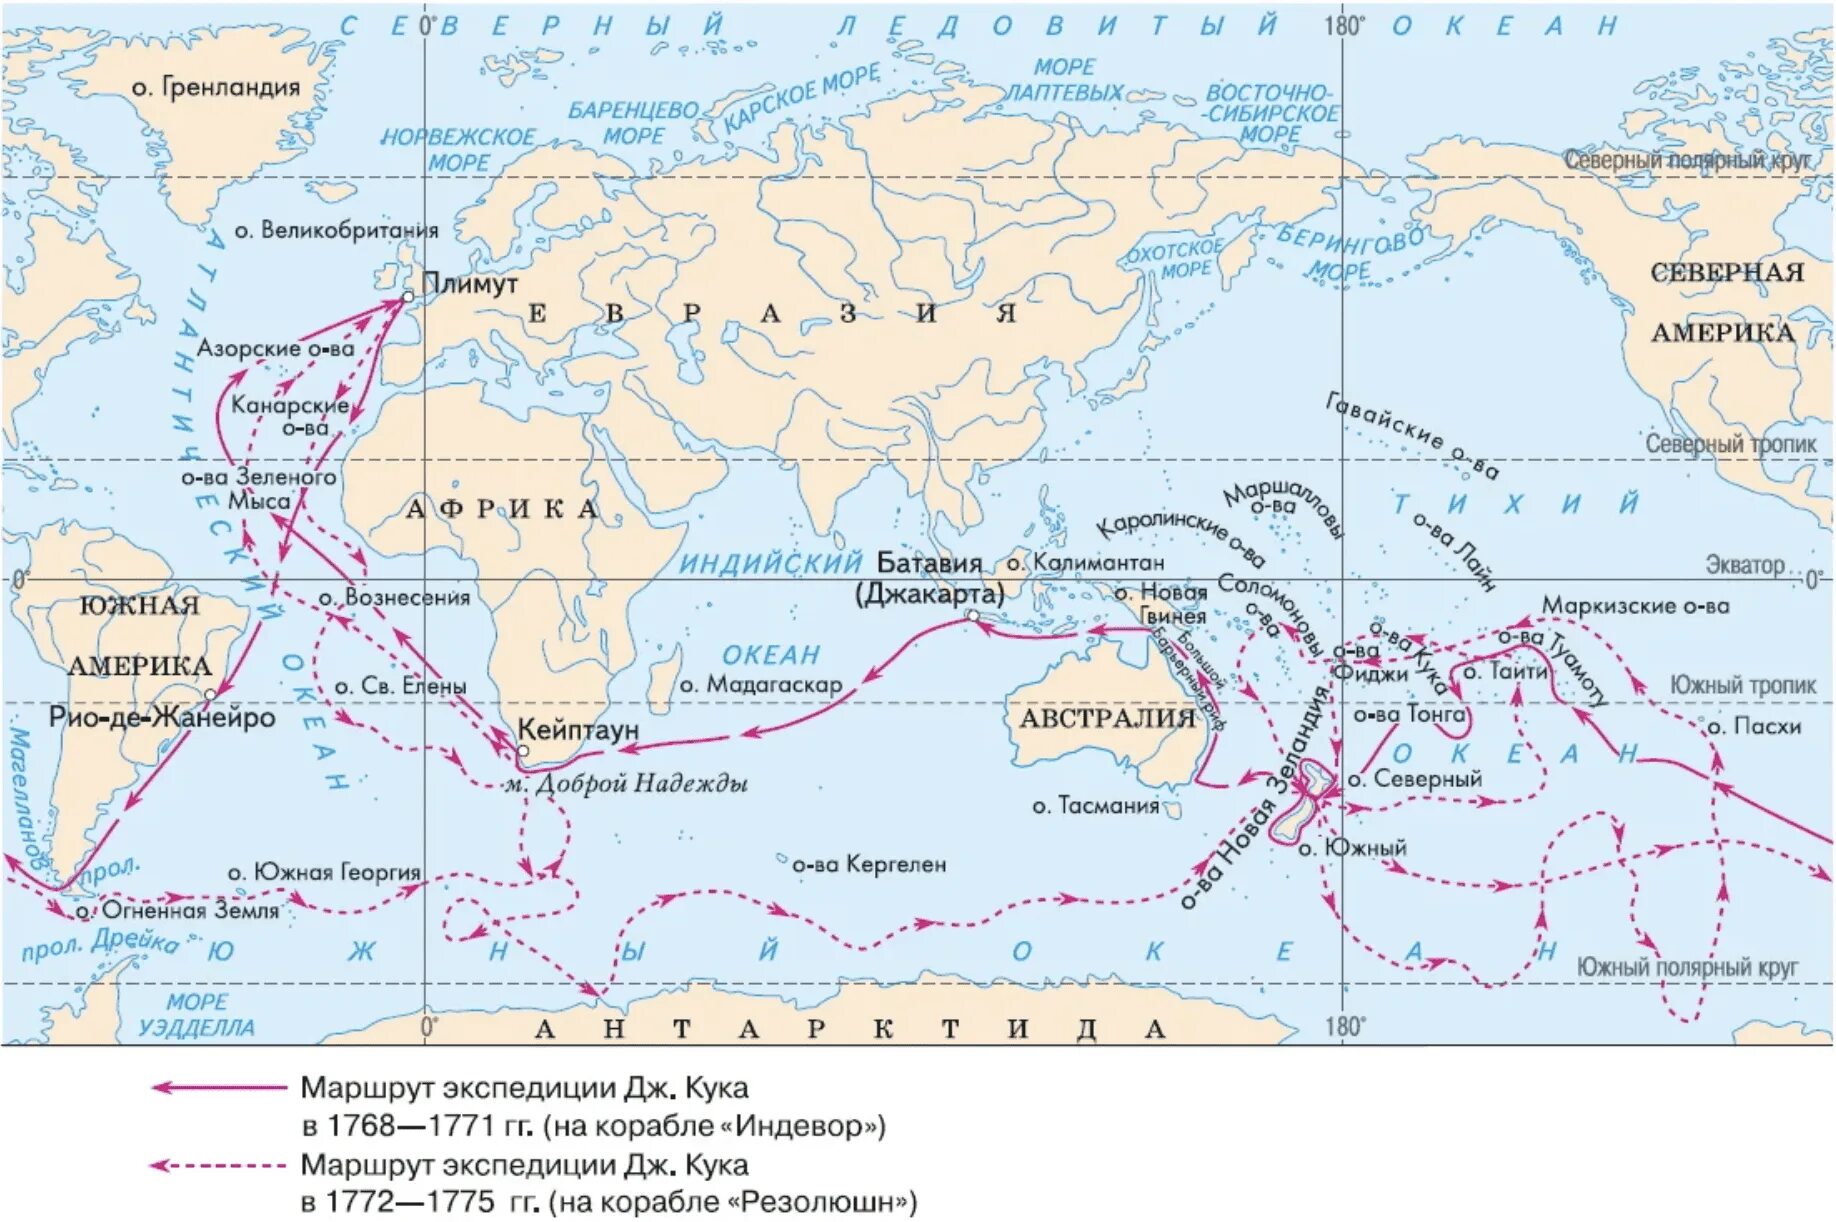 6 кругосветных путешествий. Путешествие Джеймса Кука 1768 на карте. Маршрут экспедиции Джеймса Кука на карте. Маршрут Джеймса Кука на карте 1768-1771.